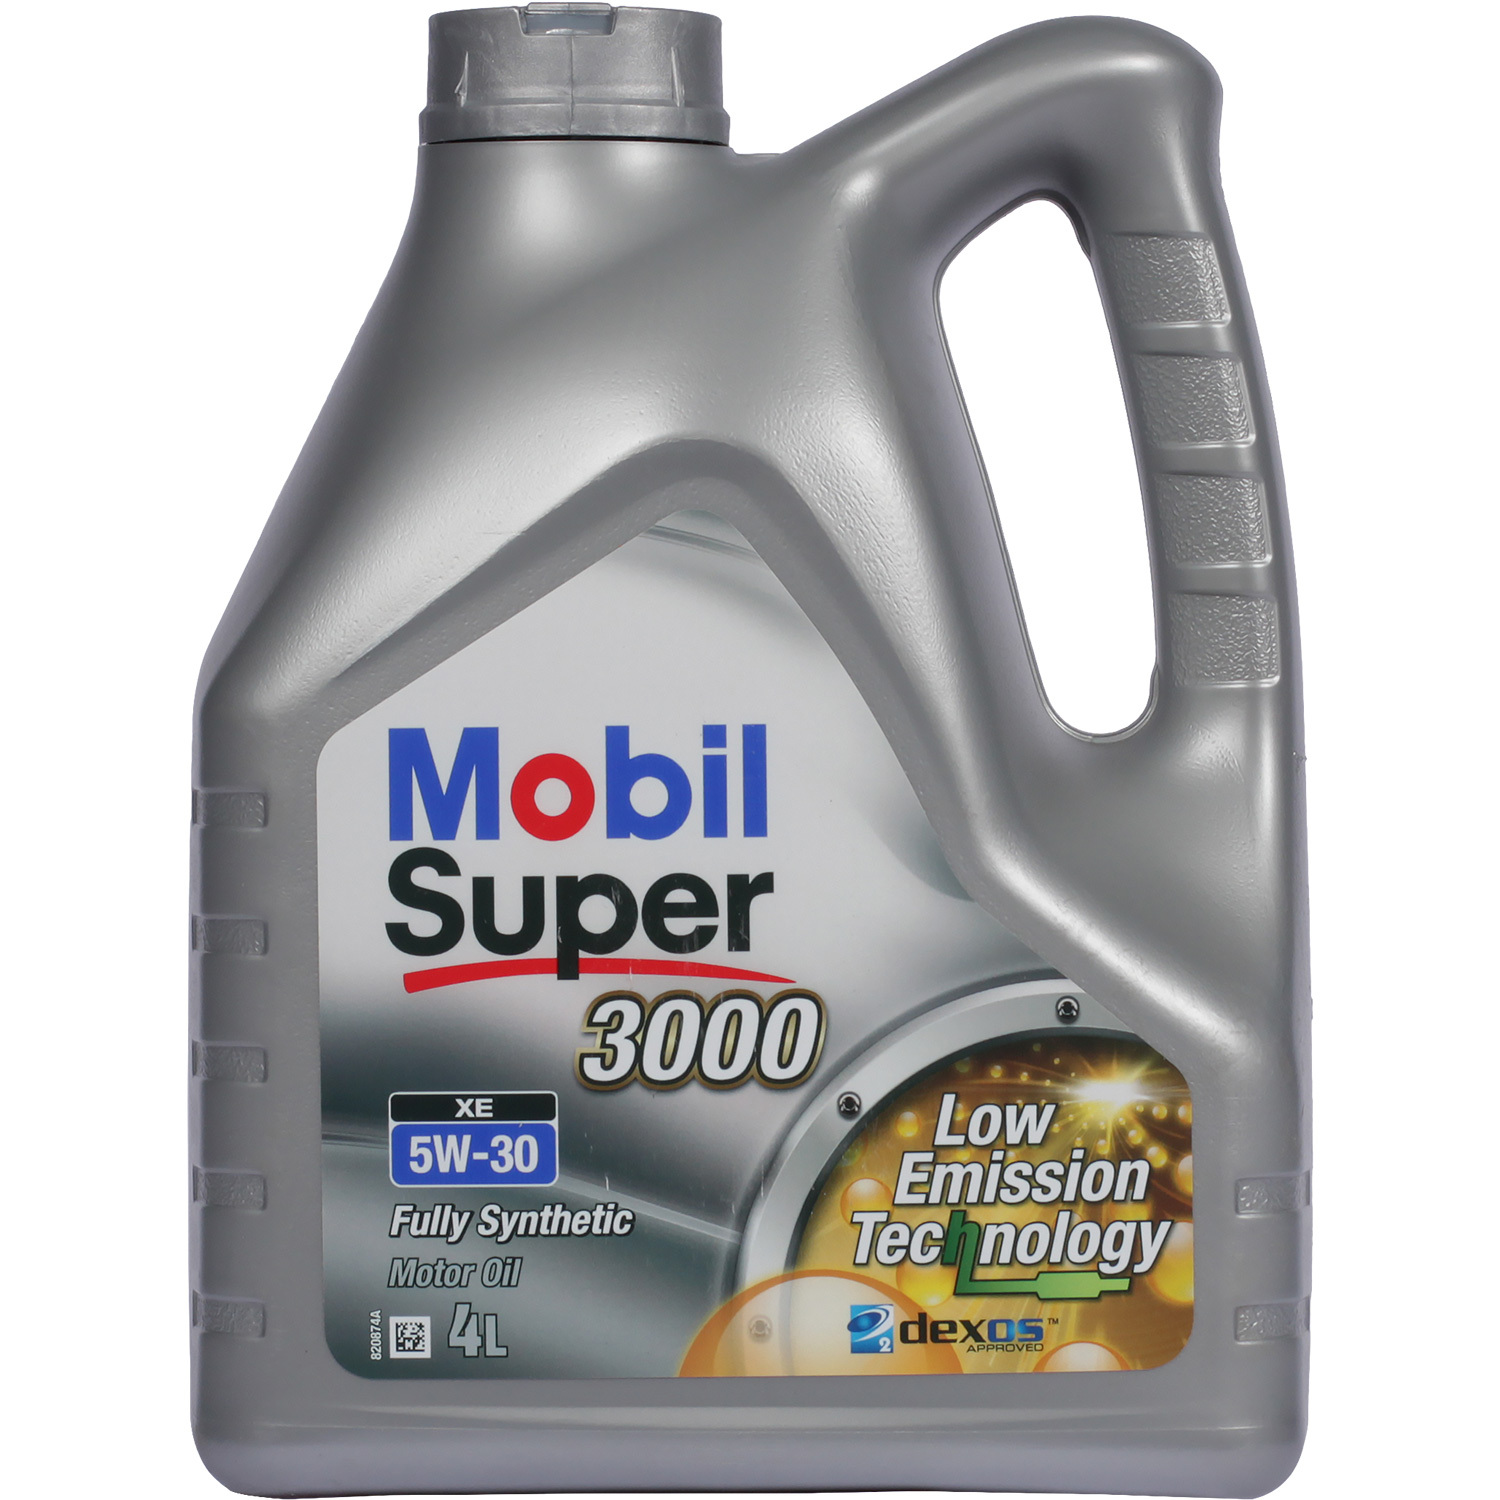 Mobil Моторное масло Mobil Super 3000 XE 5W-30, 4 л масло моторное mobil super 3000 x1 formula fe 5w 30 4л